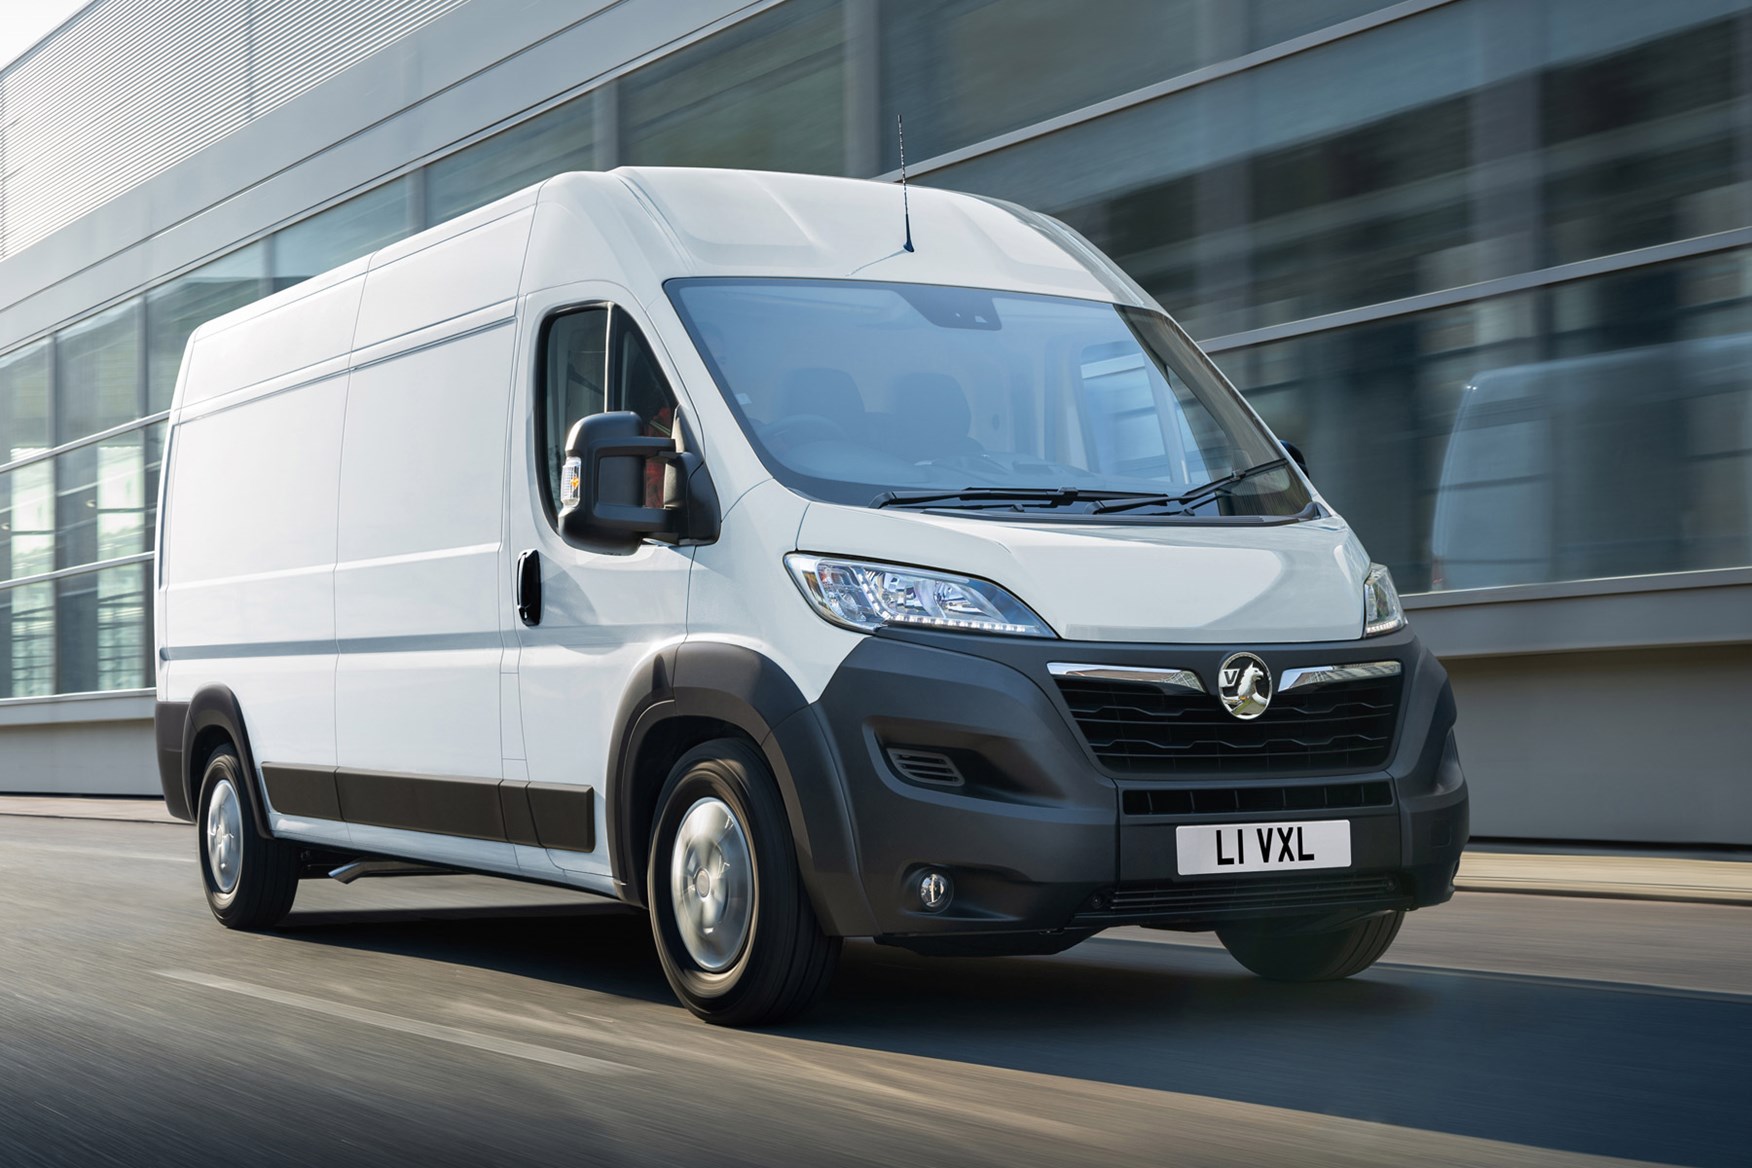 Opel launches new Movano large van based on Stellantis platform